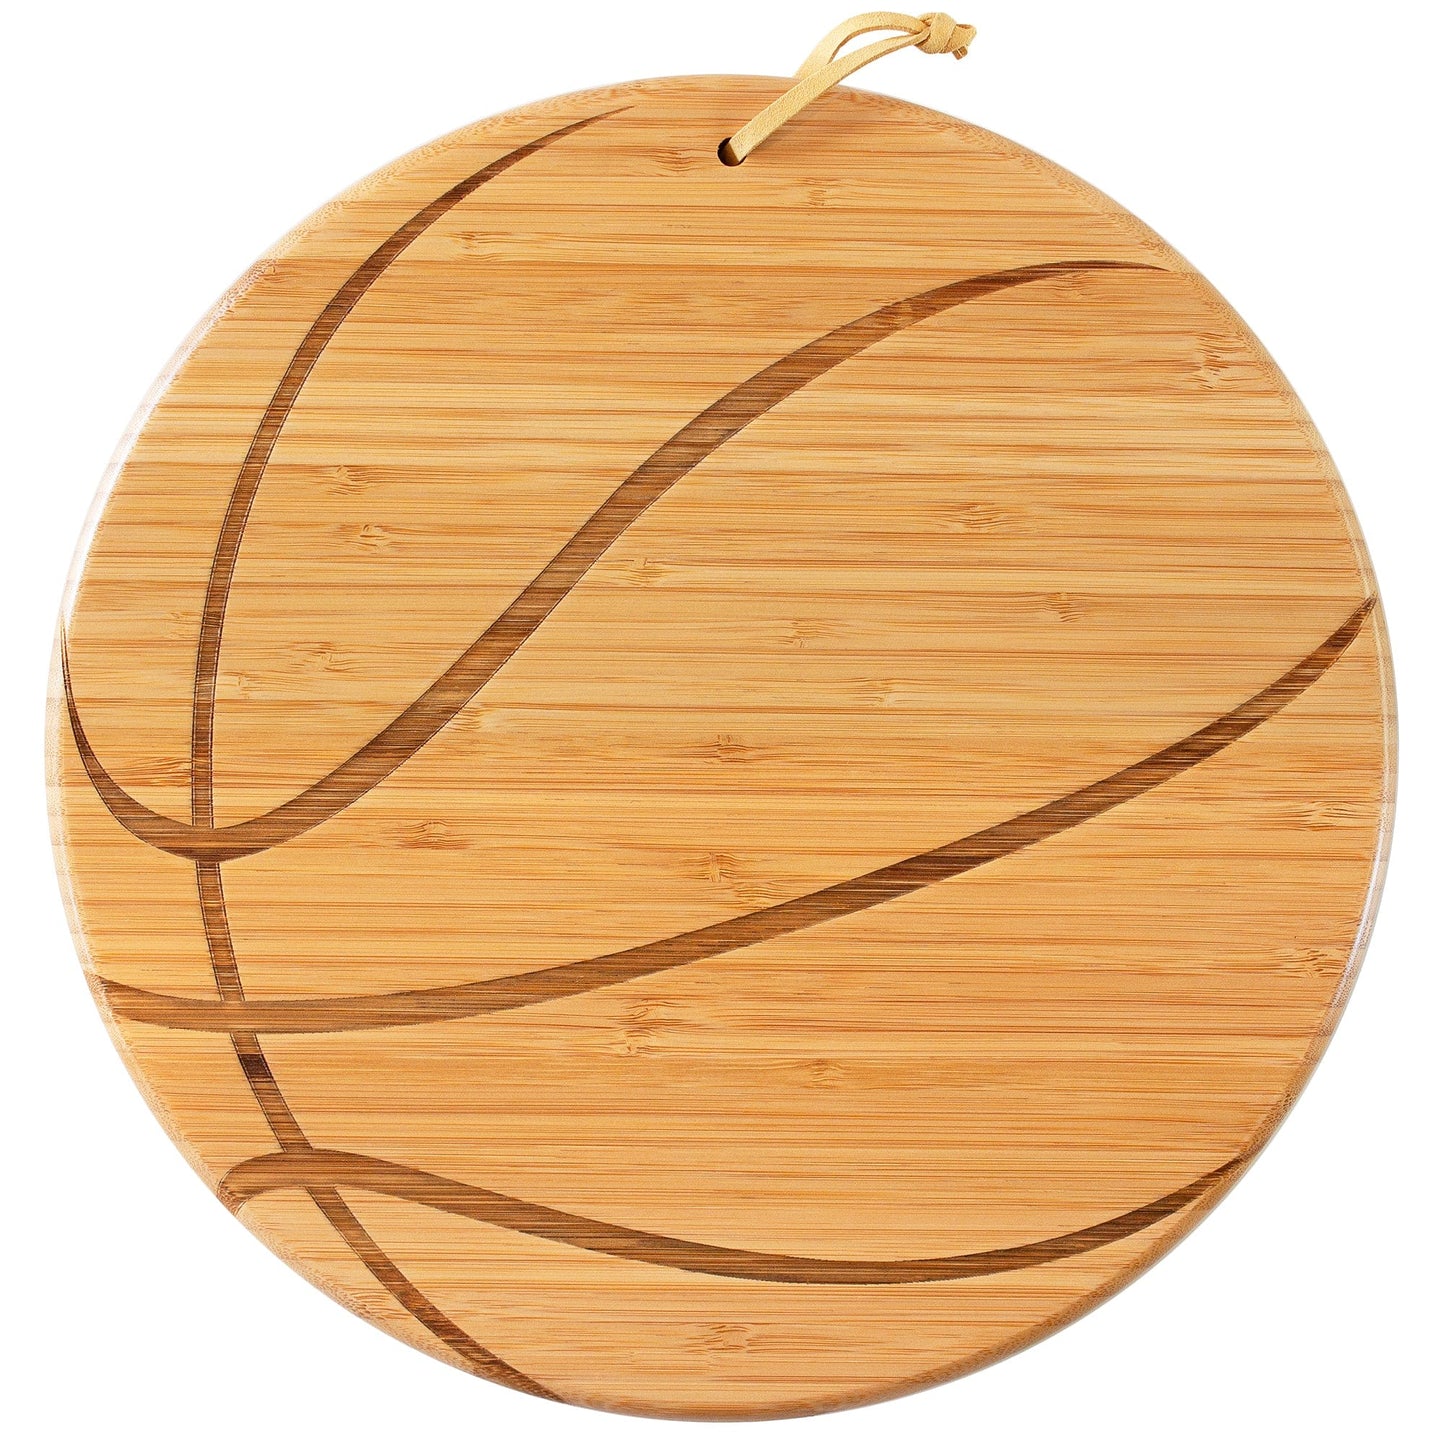 Basketball Shaped Serving & Cutting Board, 12" Diameter